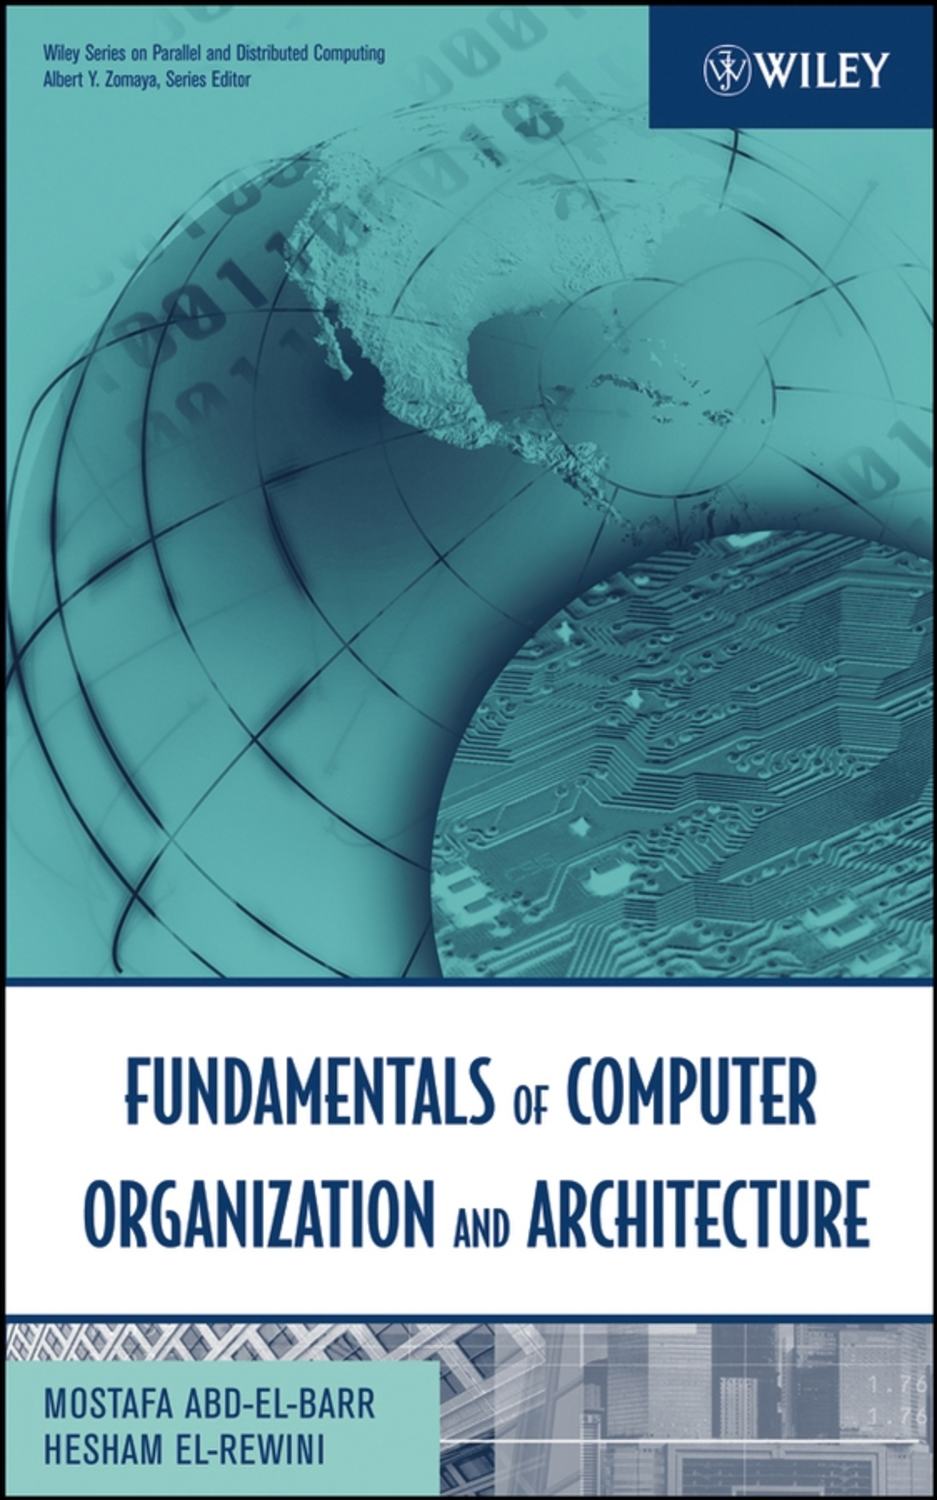 Купить книги статьи. Книга компьютер статьи. Computer Organization and Architecture. Fundamentals of Computers. Rewini.